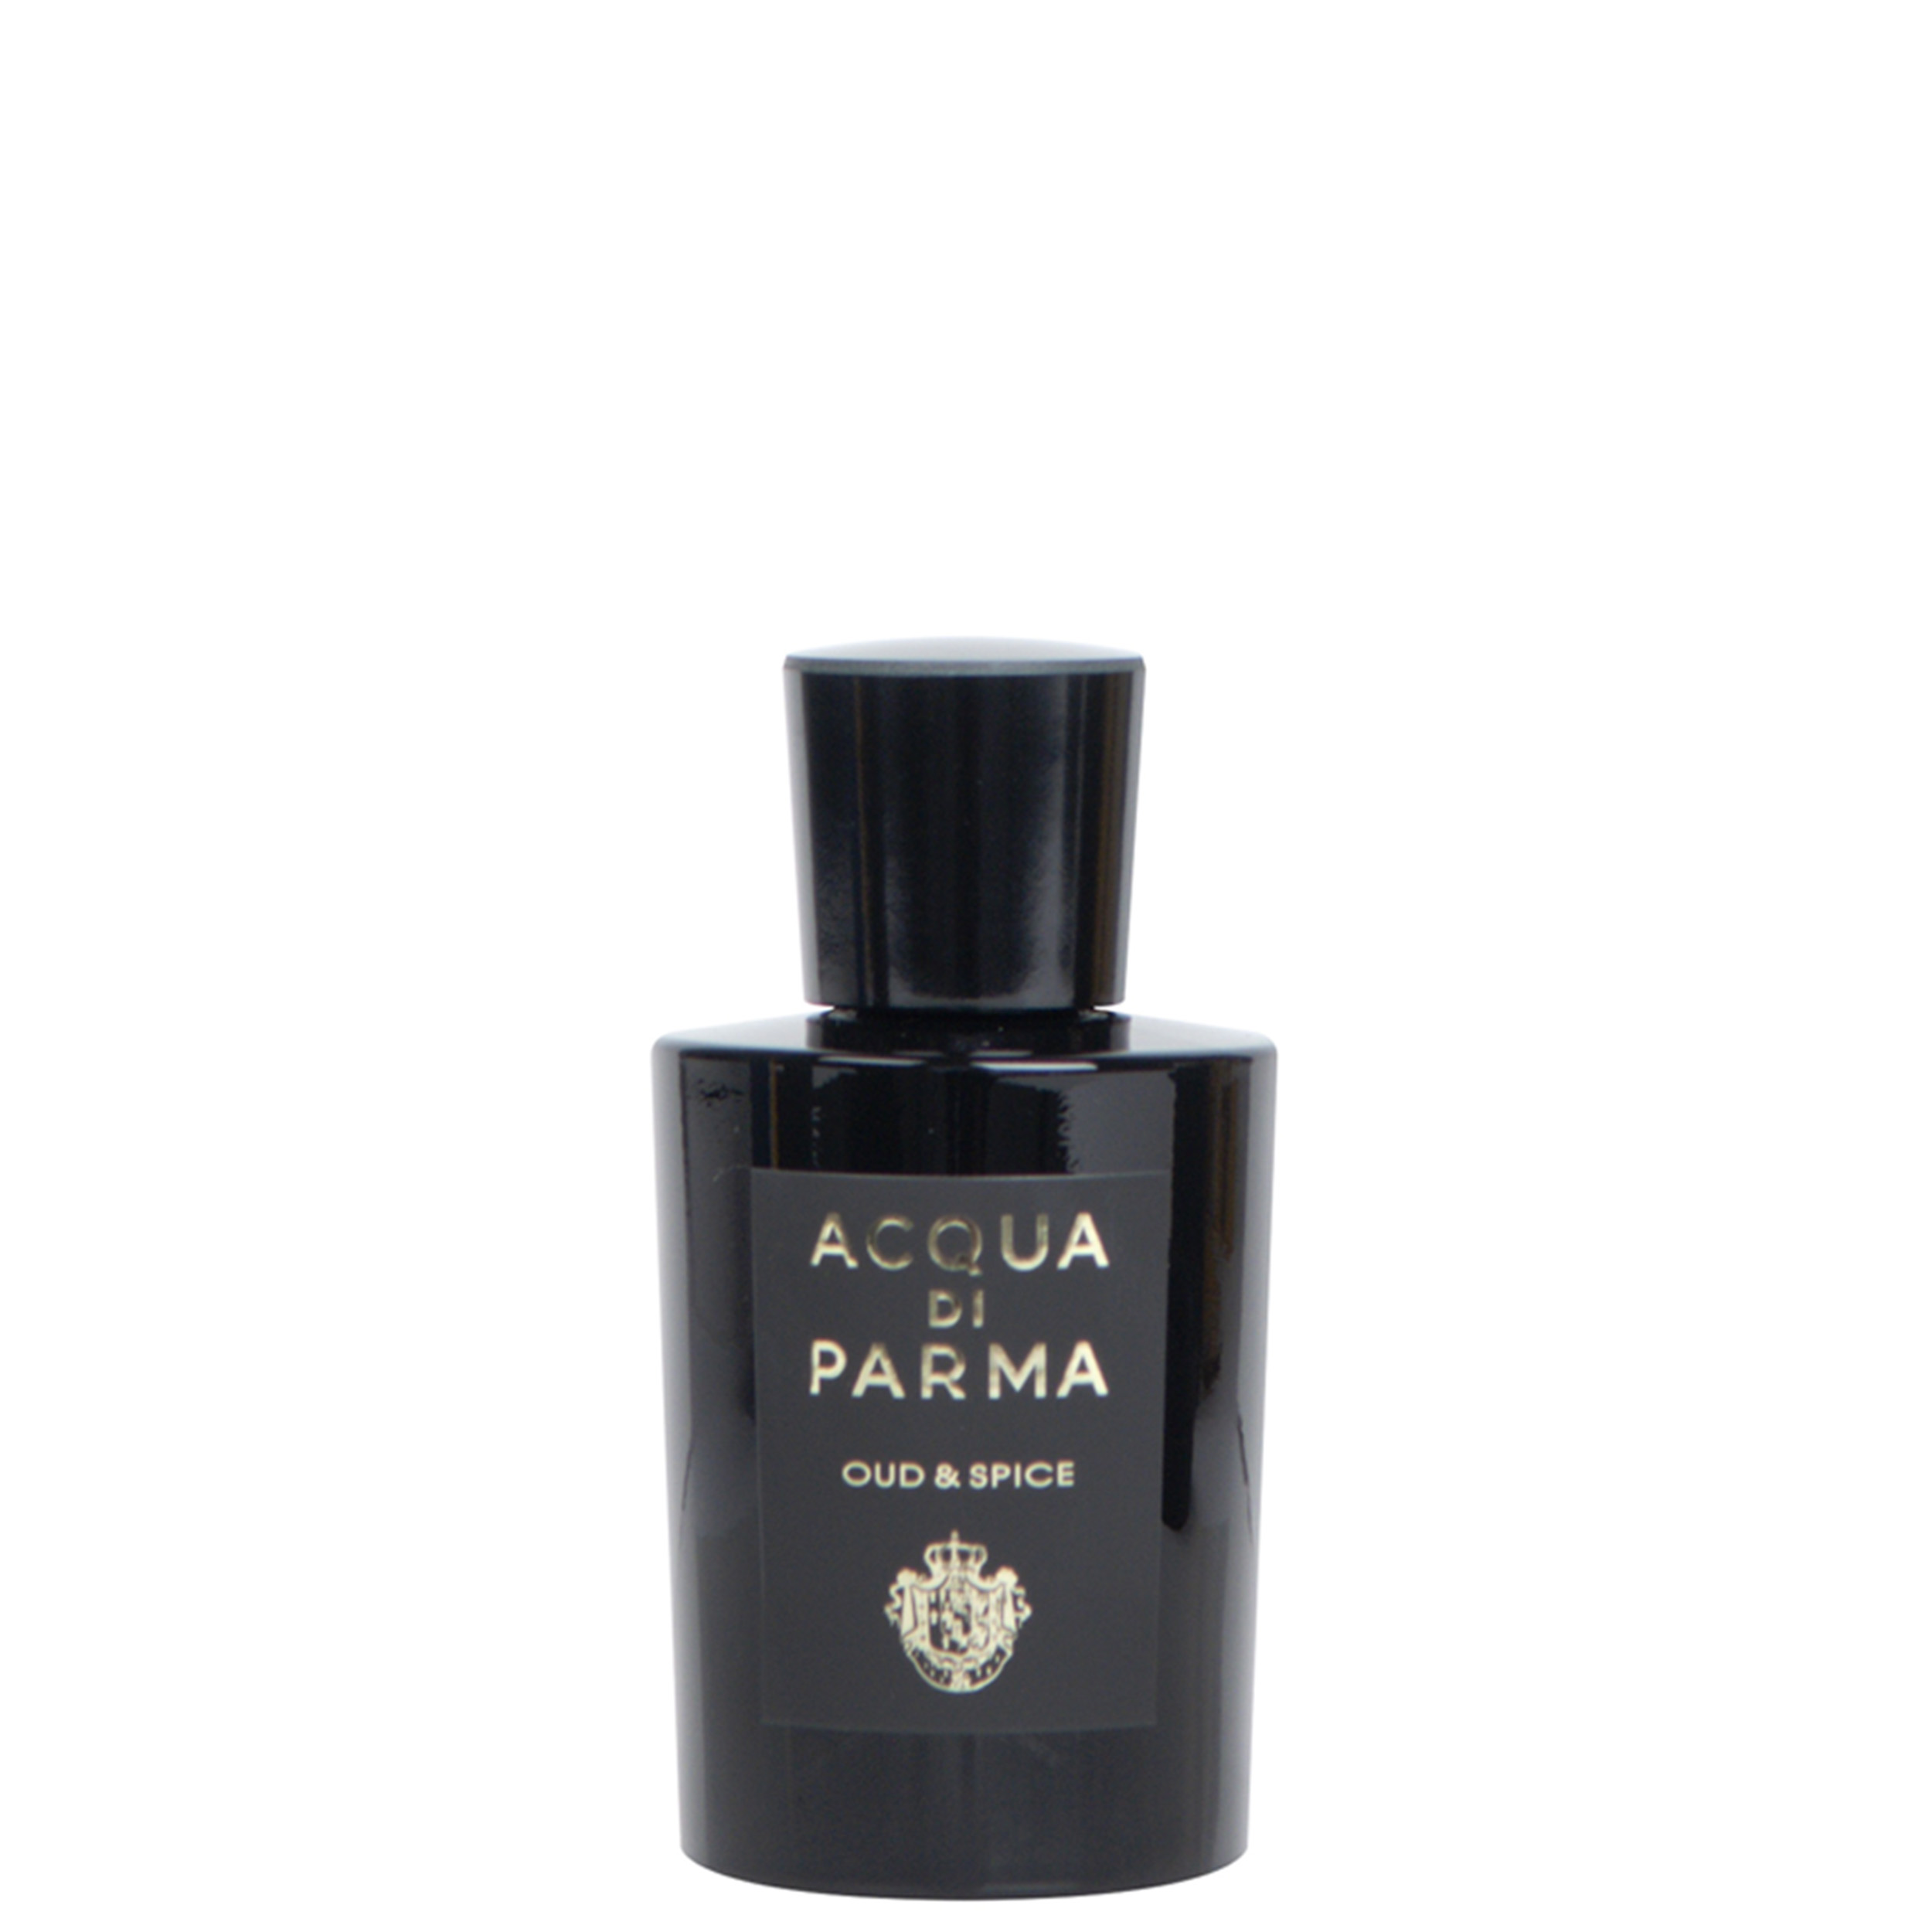 Acqua Di Parma ’Oud And Spice’ 100ml EDP Concentrate Fragrance